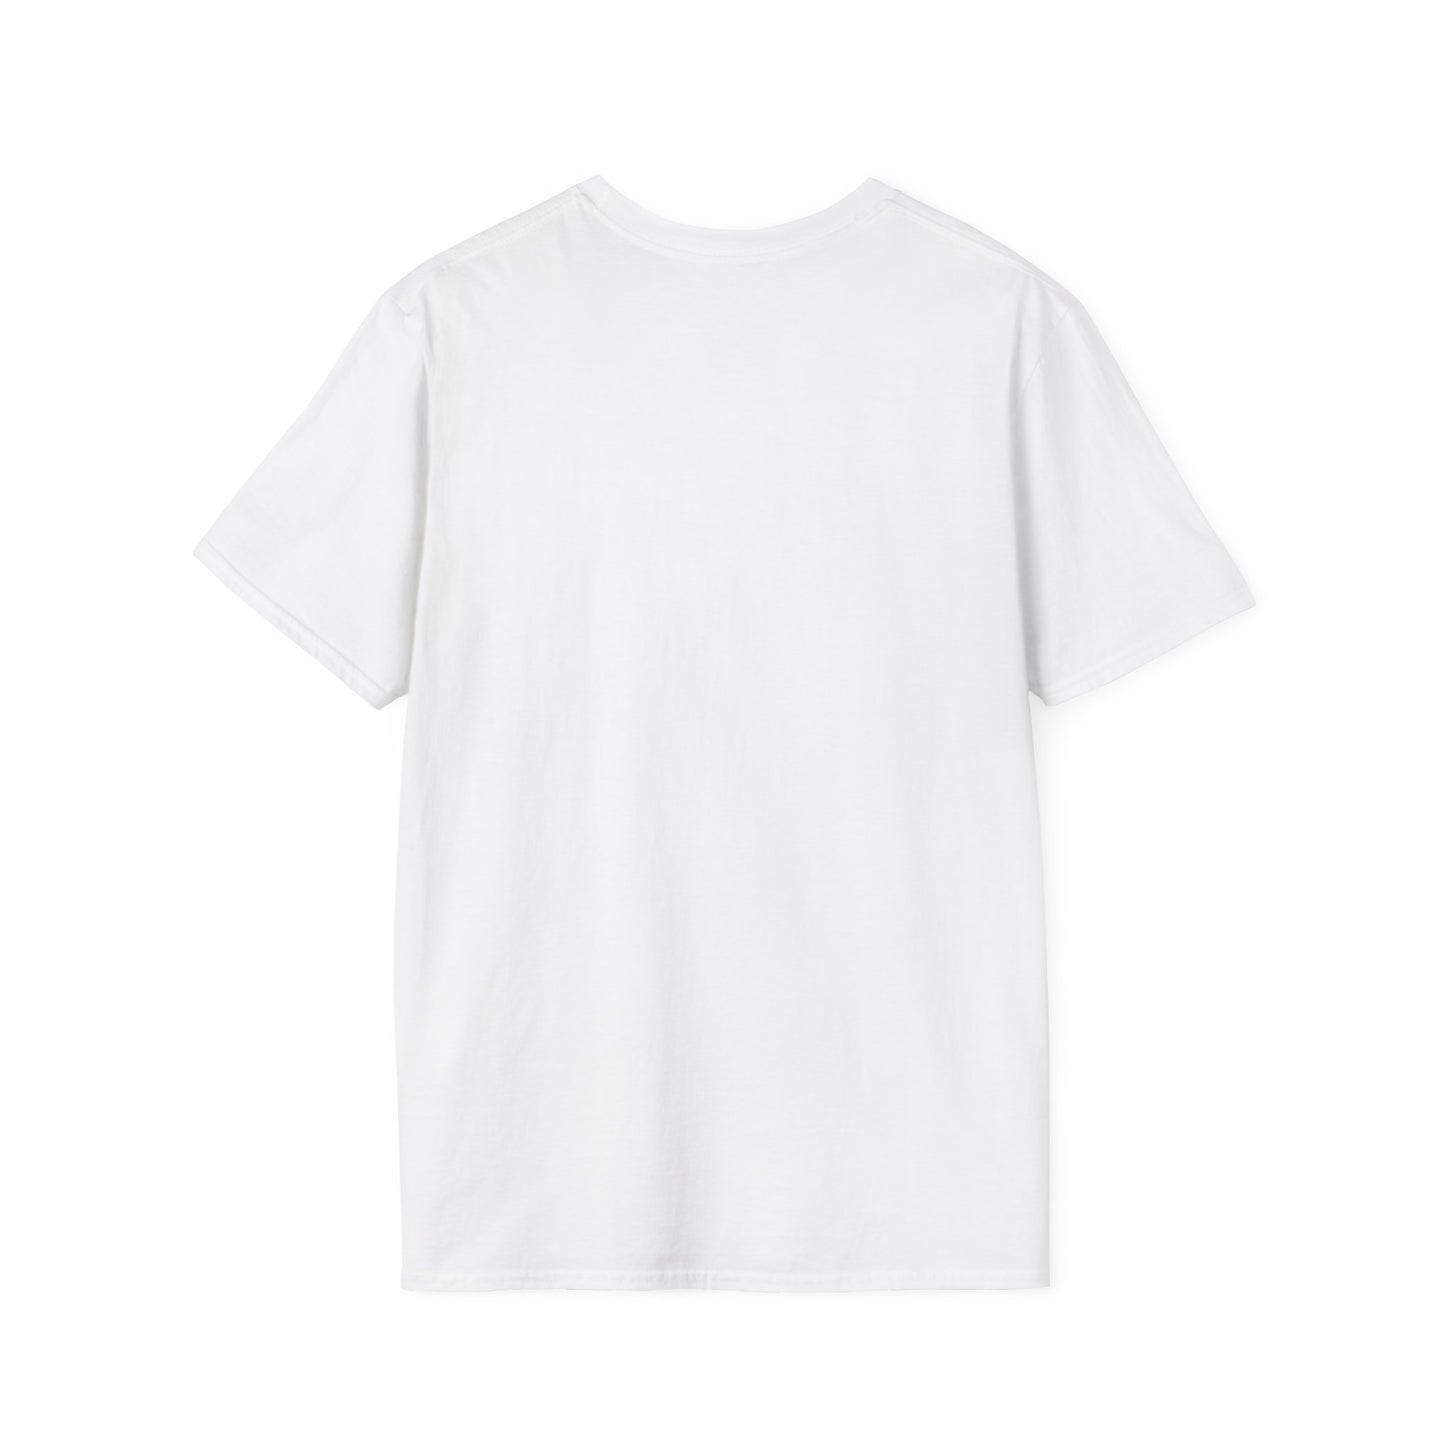 100% White Cotton T-Shirt